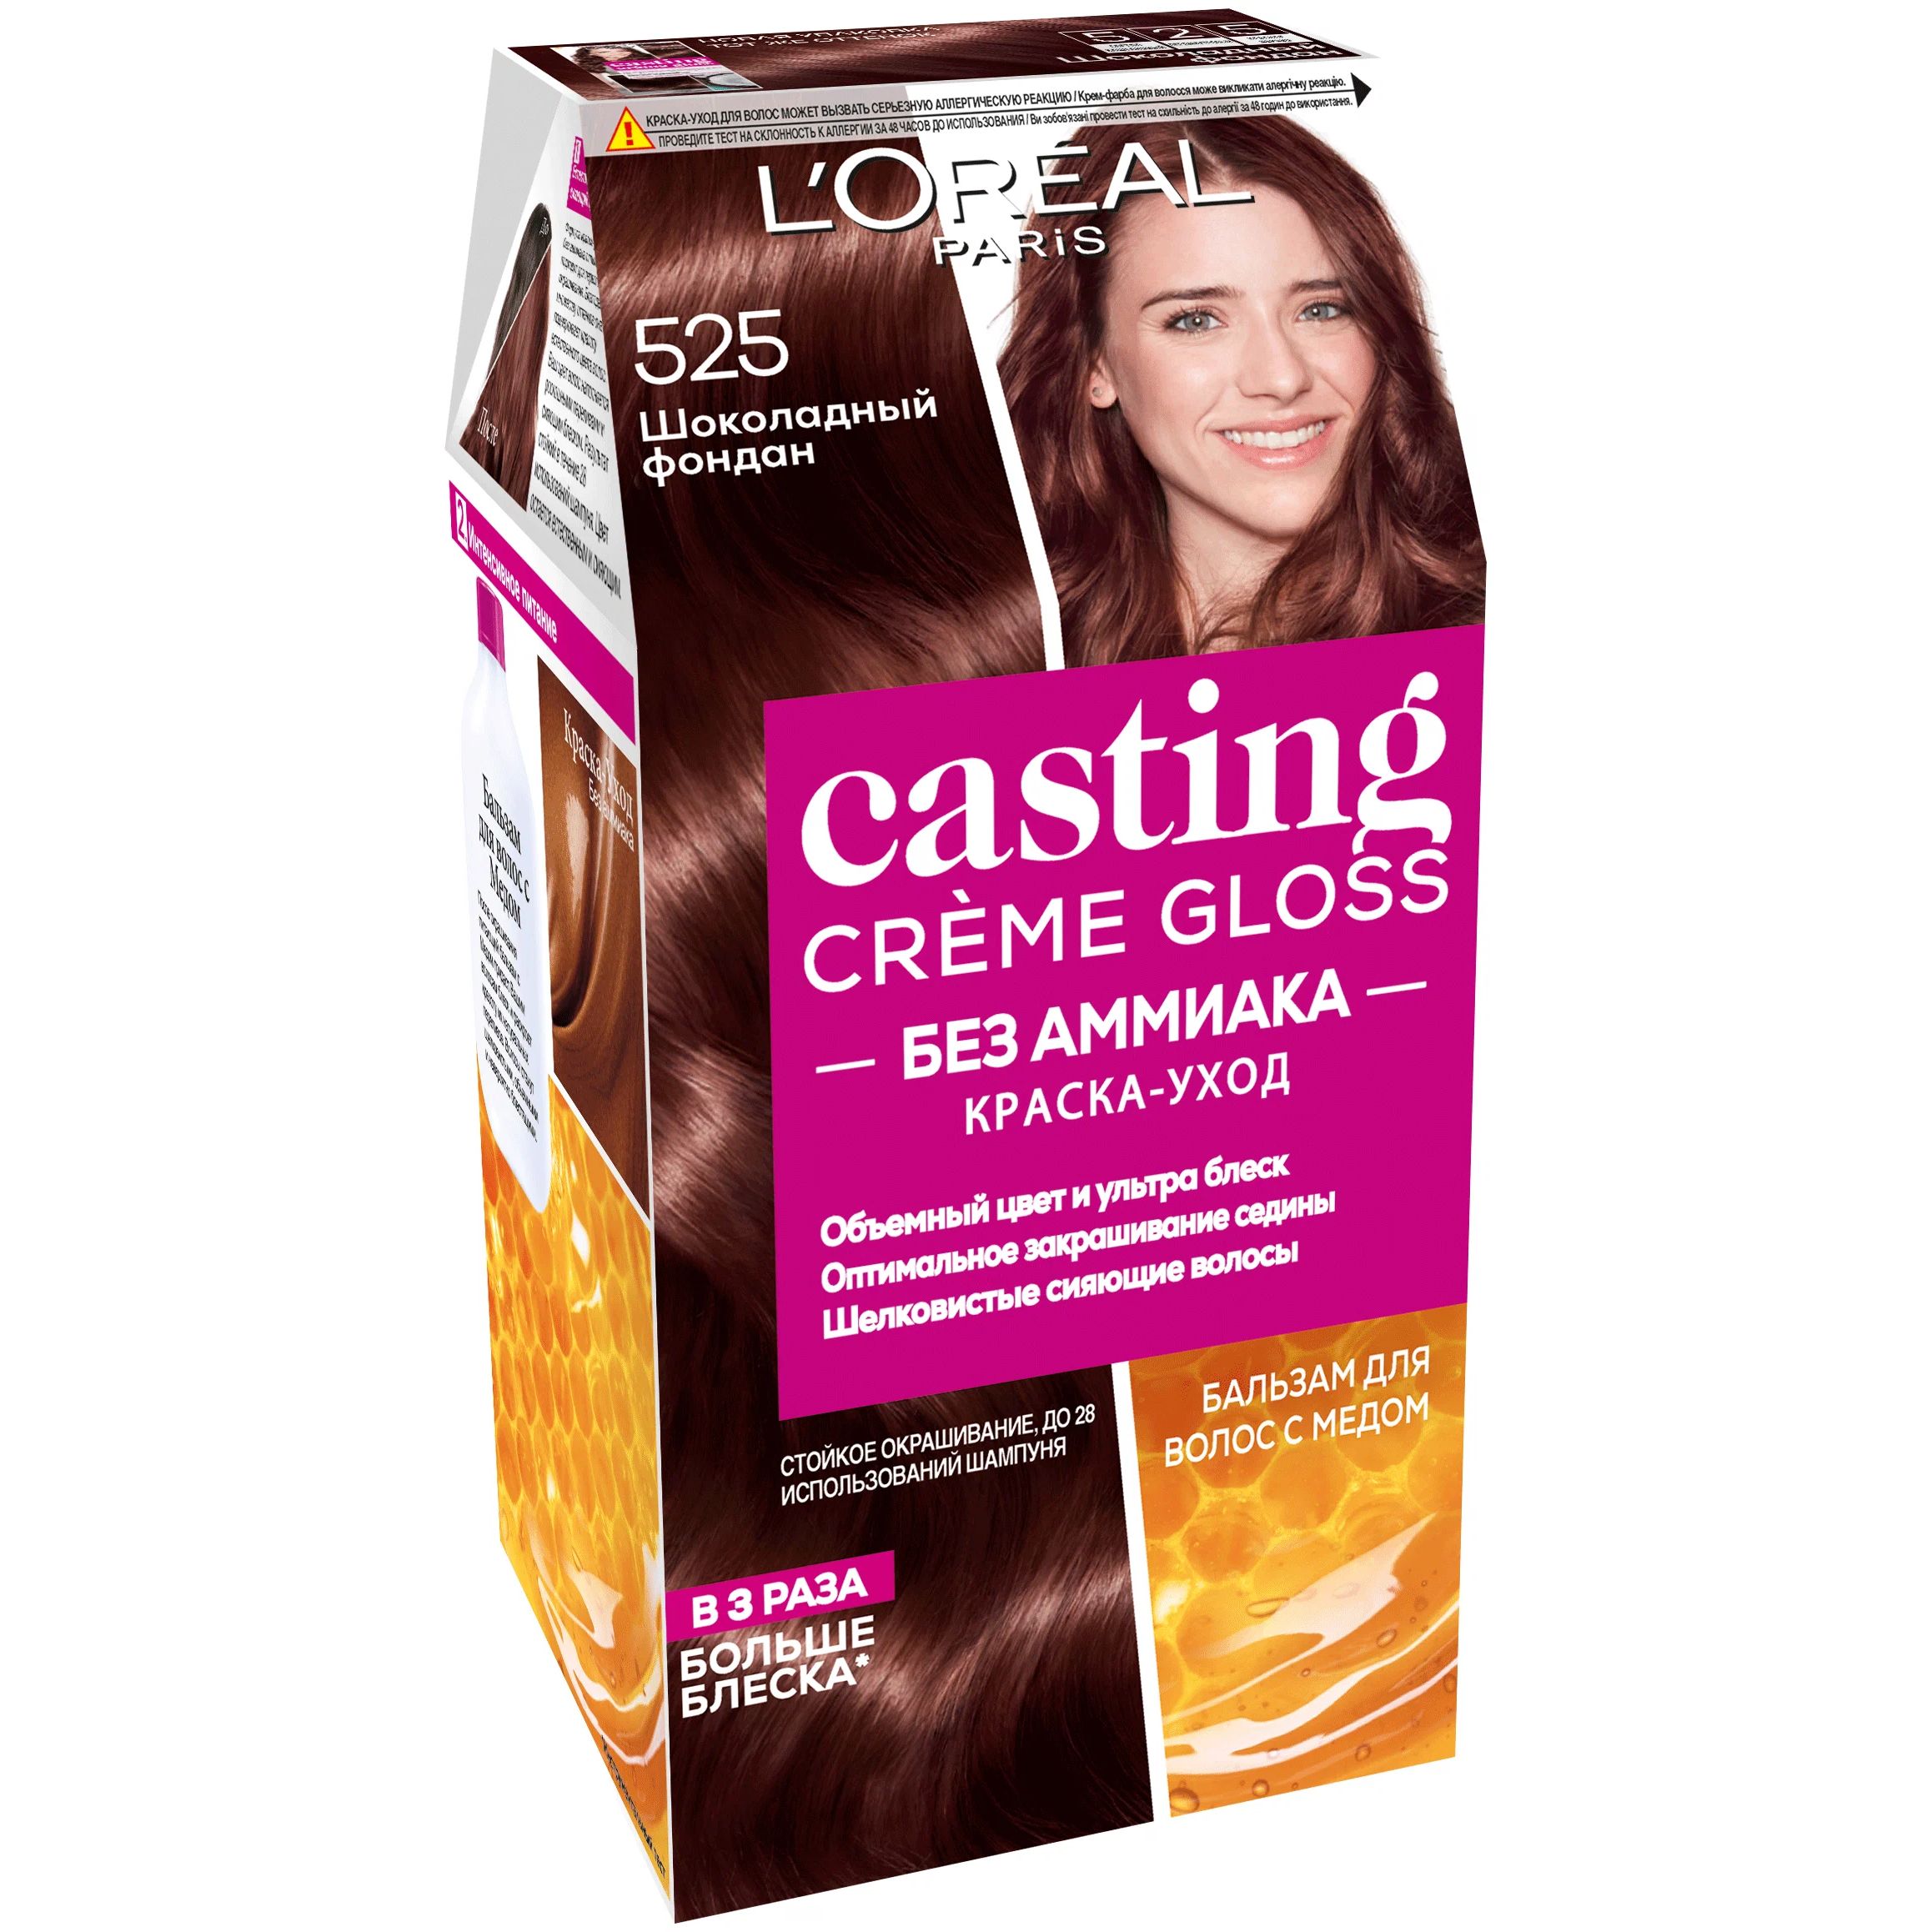 Краска-уход для волос L'Oreal Paris Casting Creme Gloss, 525 шоколадный фондан, 180 мл